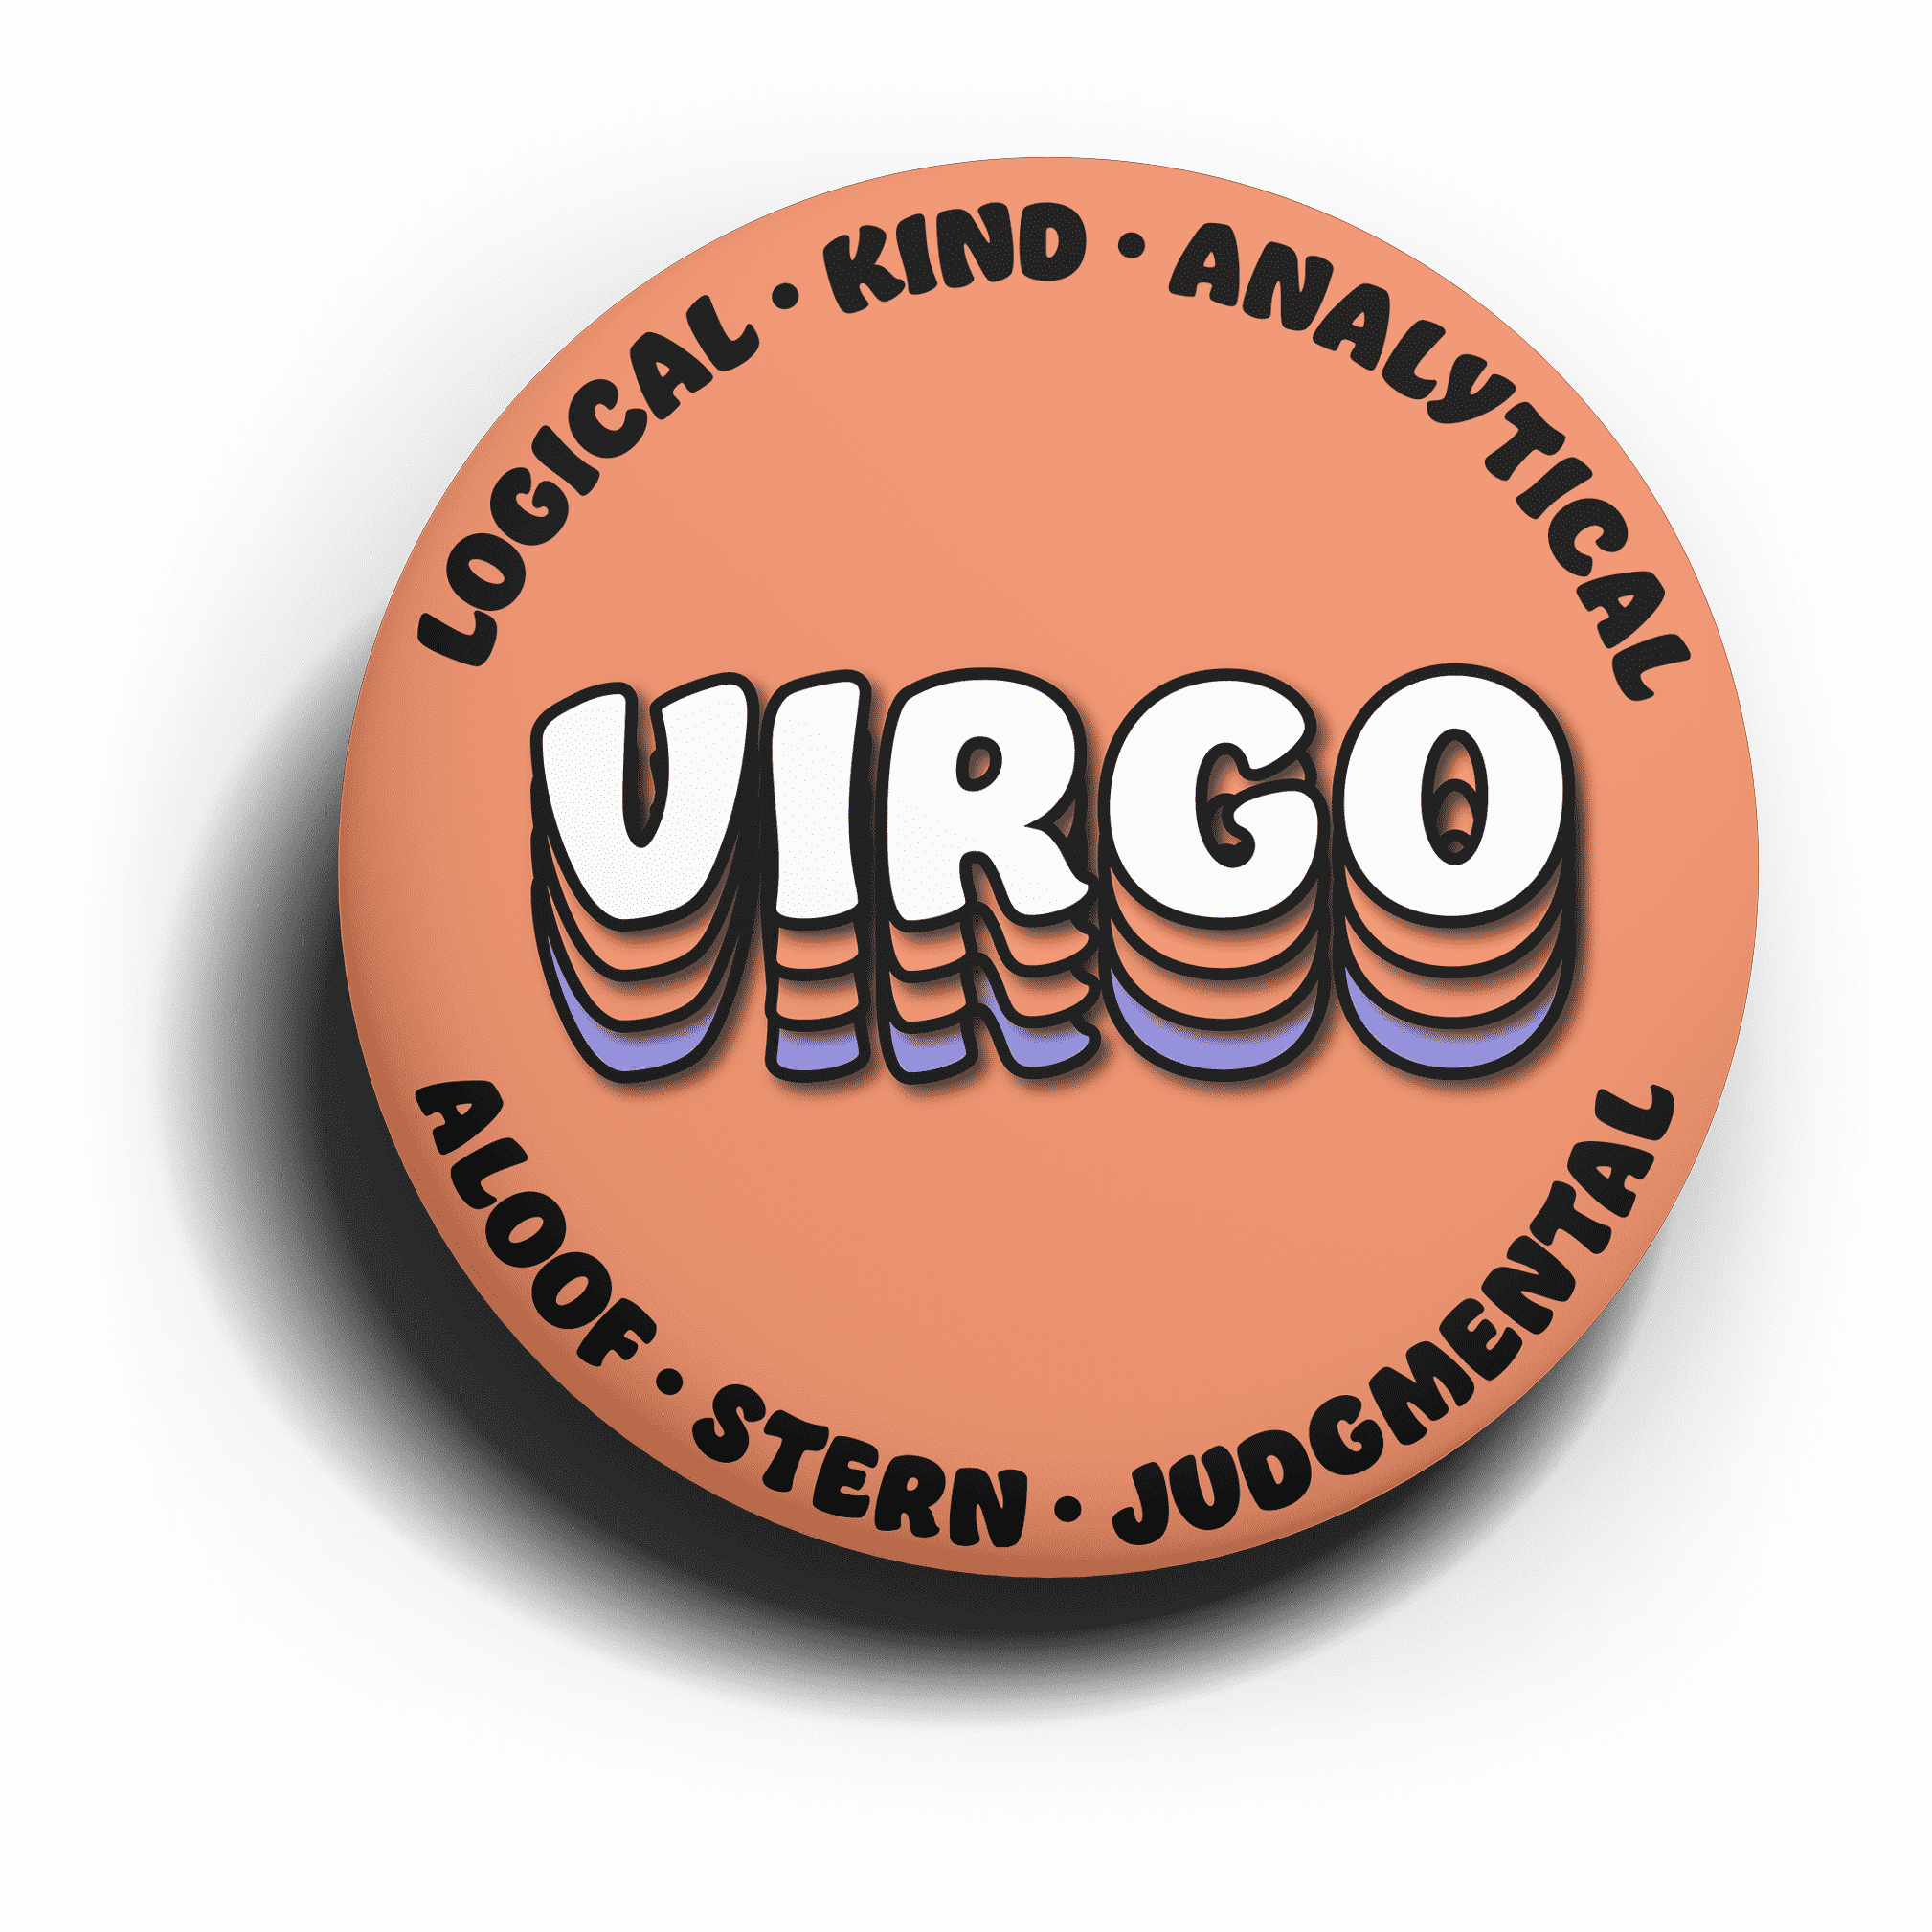 (Zodiac) Virgo Characteristics